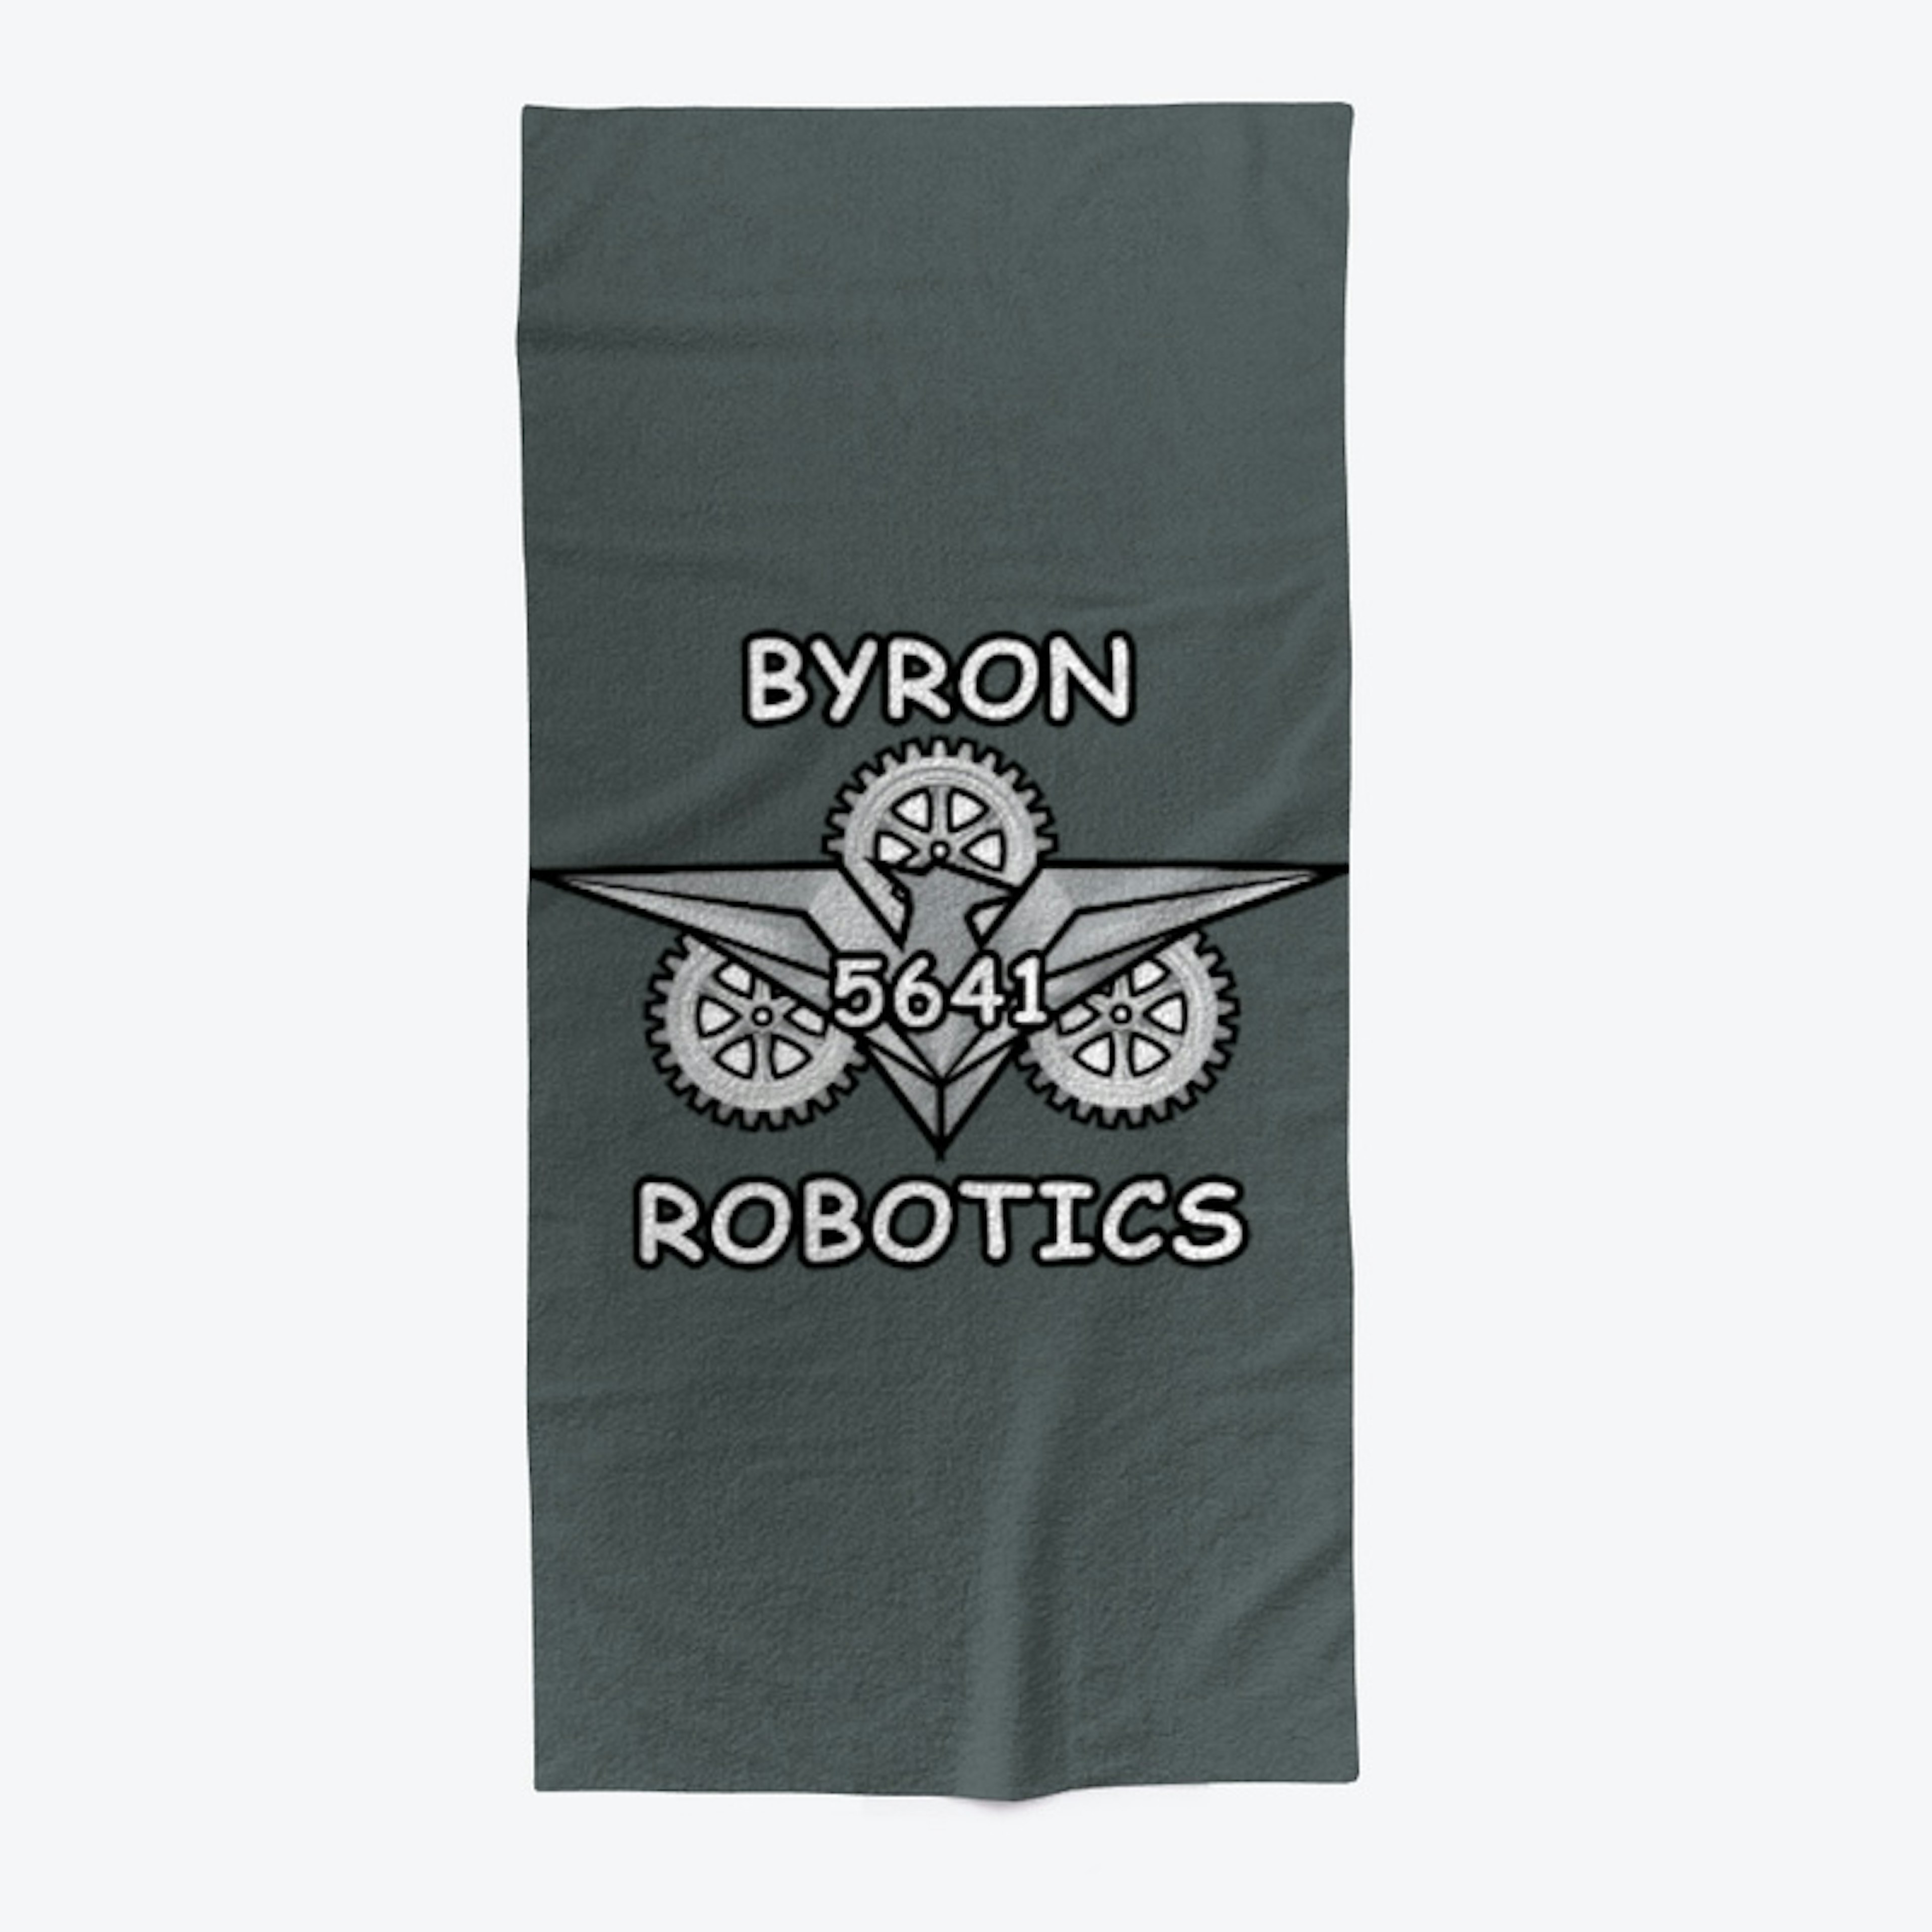  Byron Robotics 5641